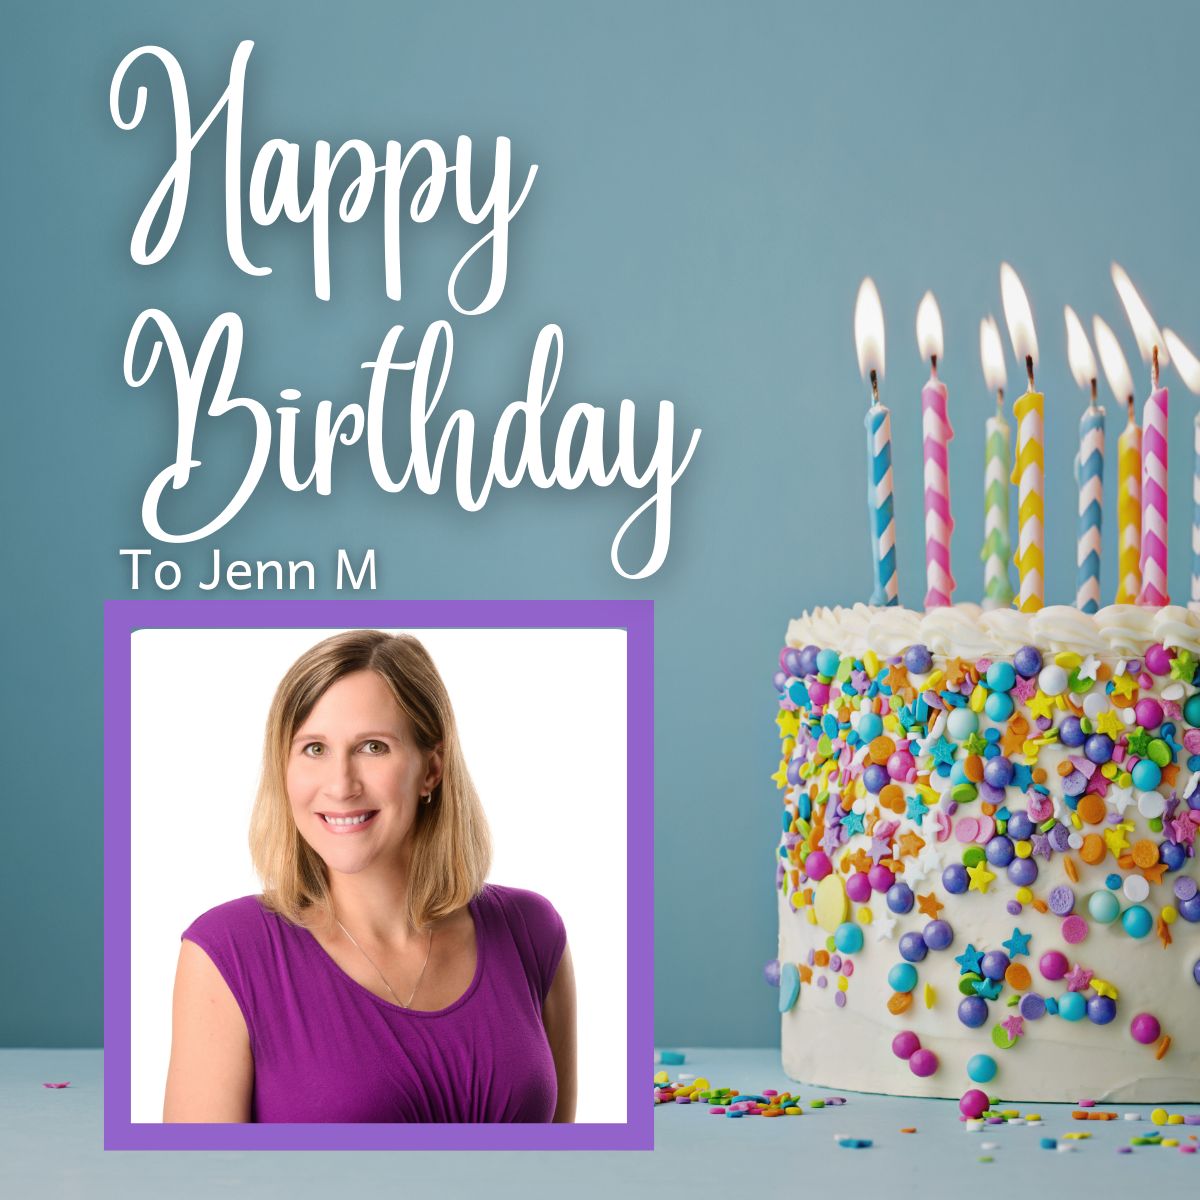 myHR Partner, Inc. on LinkedIn: Sending the warmest birthday wishes to ...